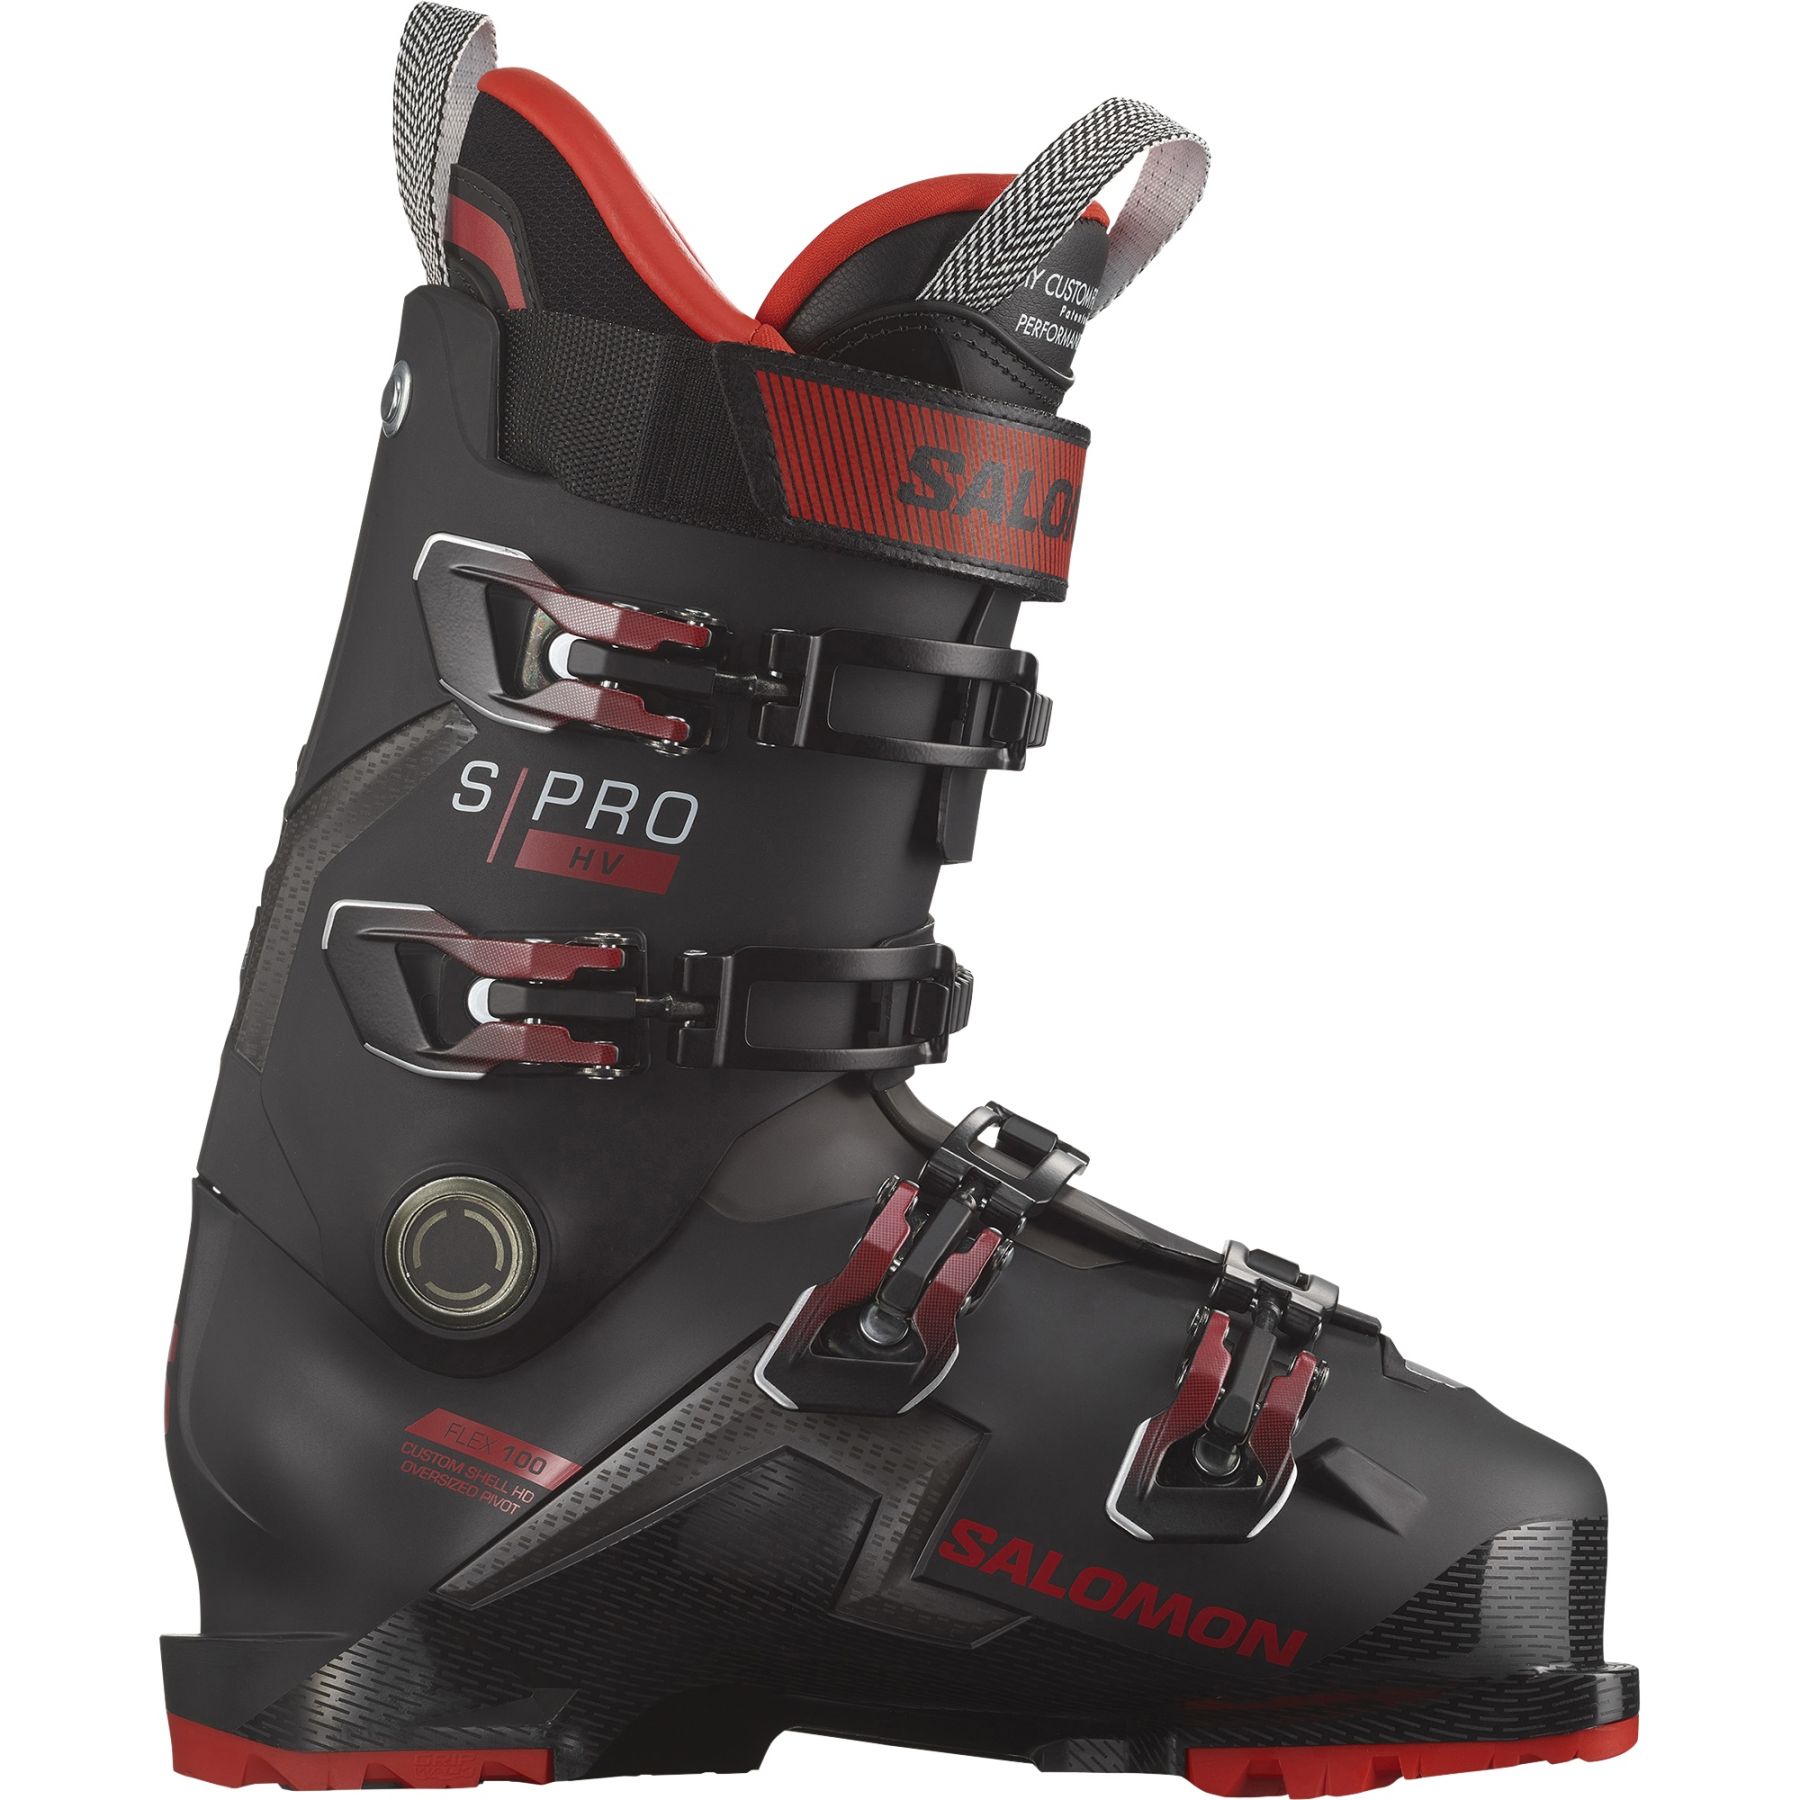 Se Salomon S/PRO HV 100 GW, skistøvler, herre, sort/rød hos Skisport.dk